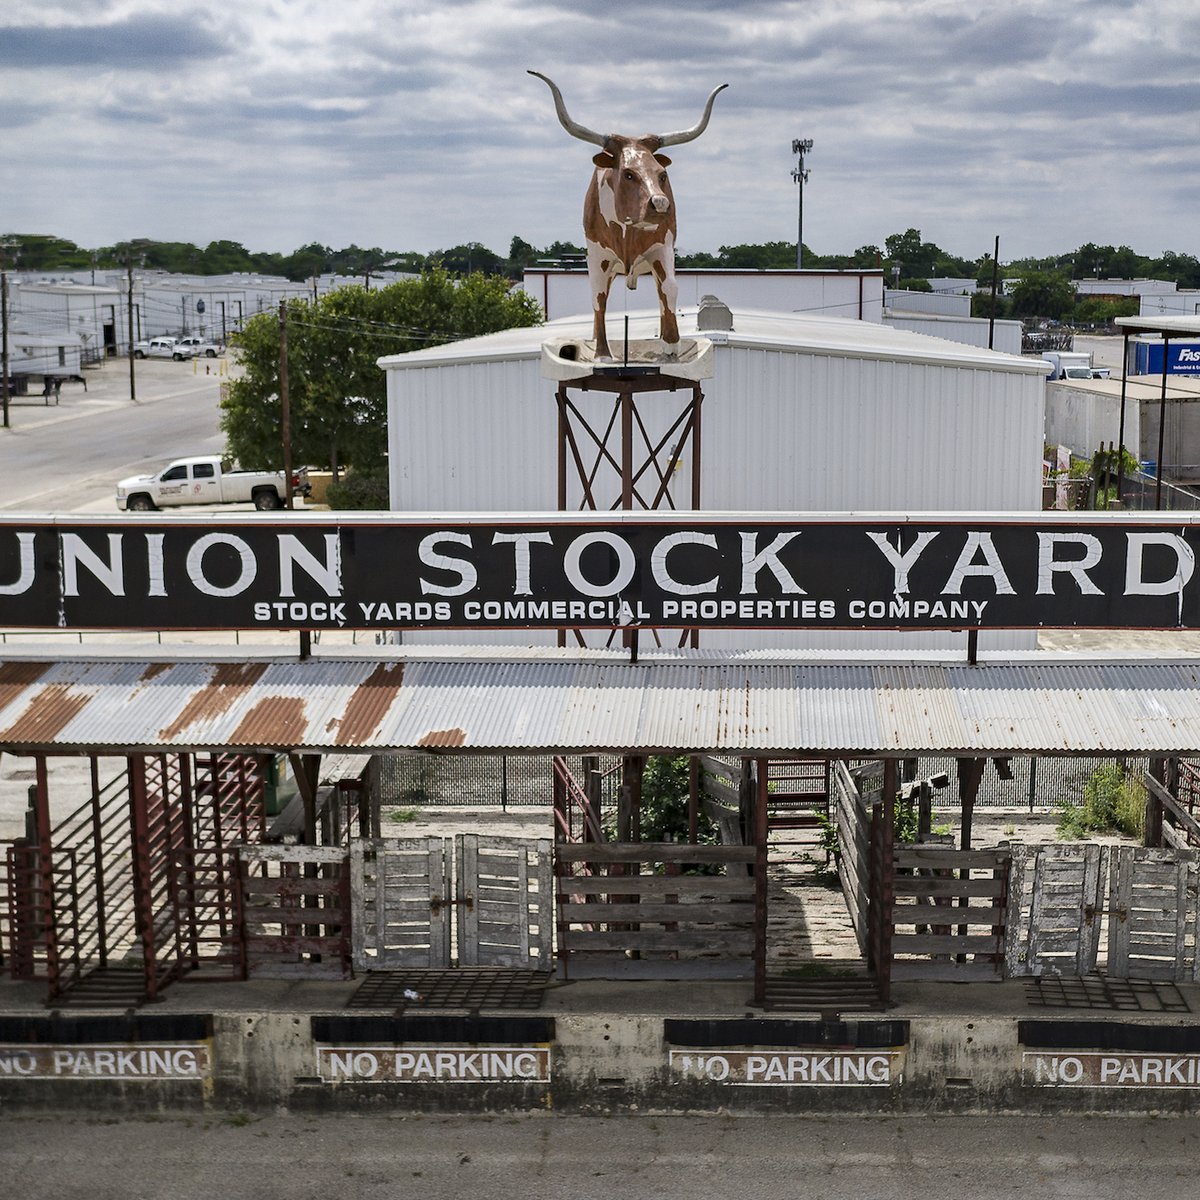 Fort Worth Stockyards Business Association